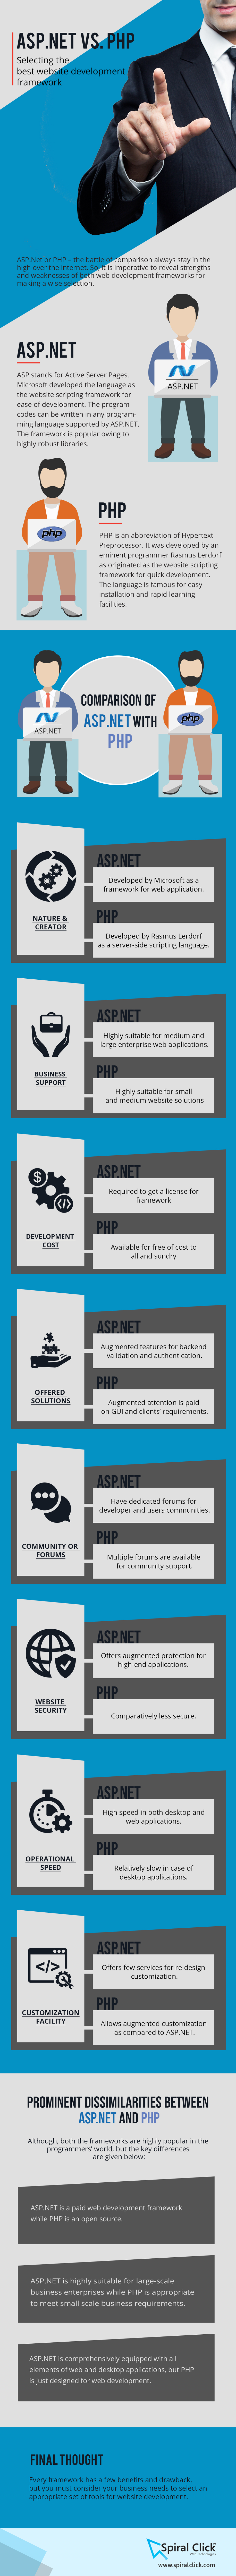 Choose The Best Web Development Framework Between ASP.NET And PHP